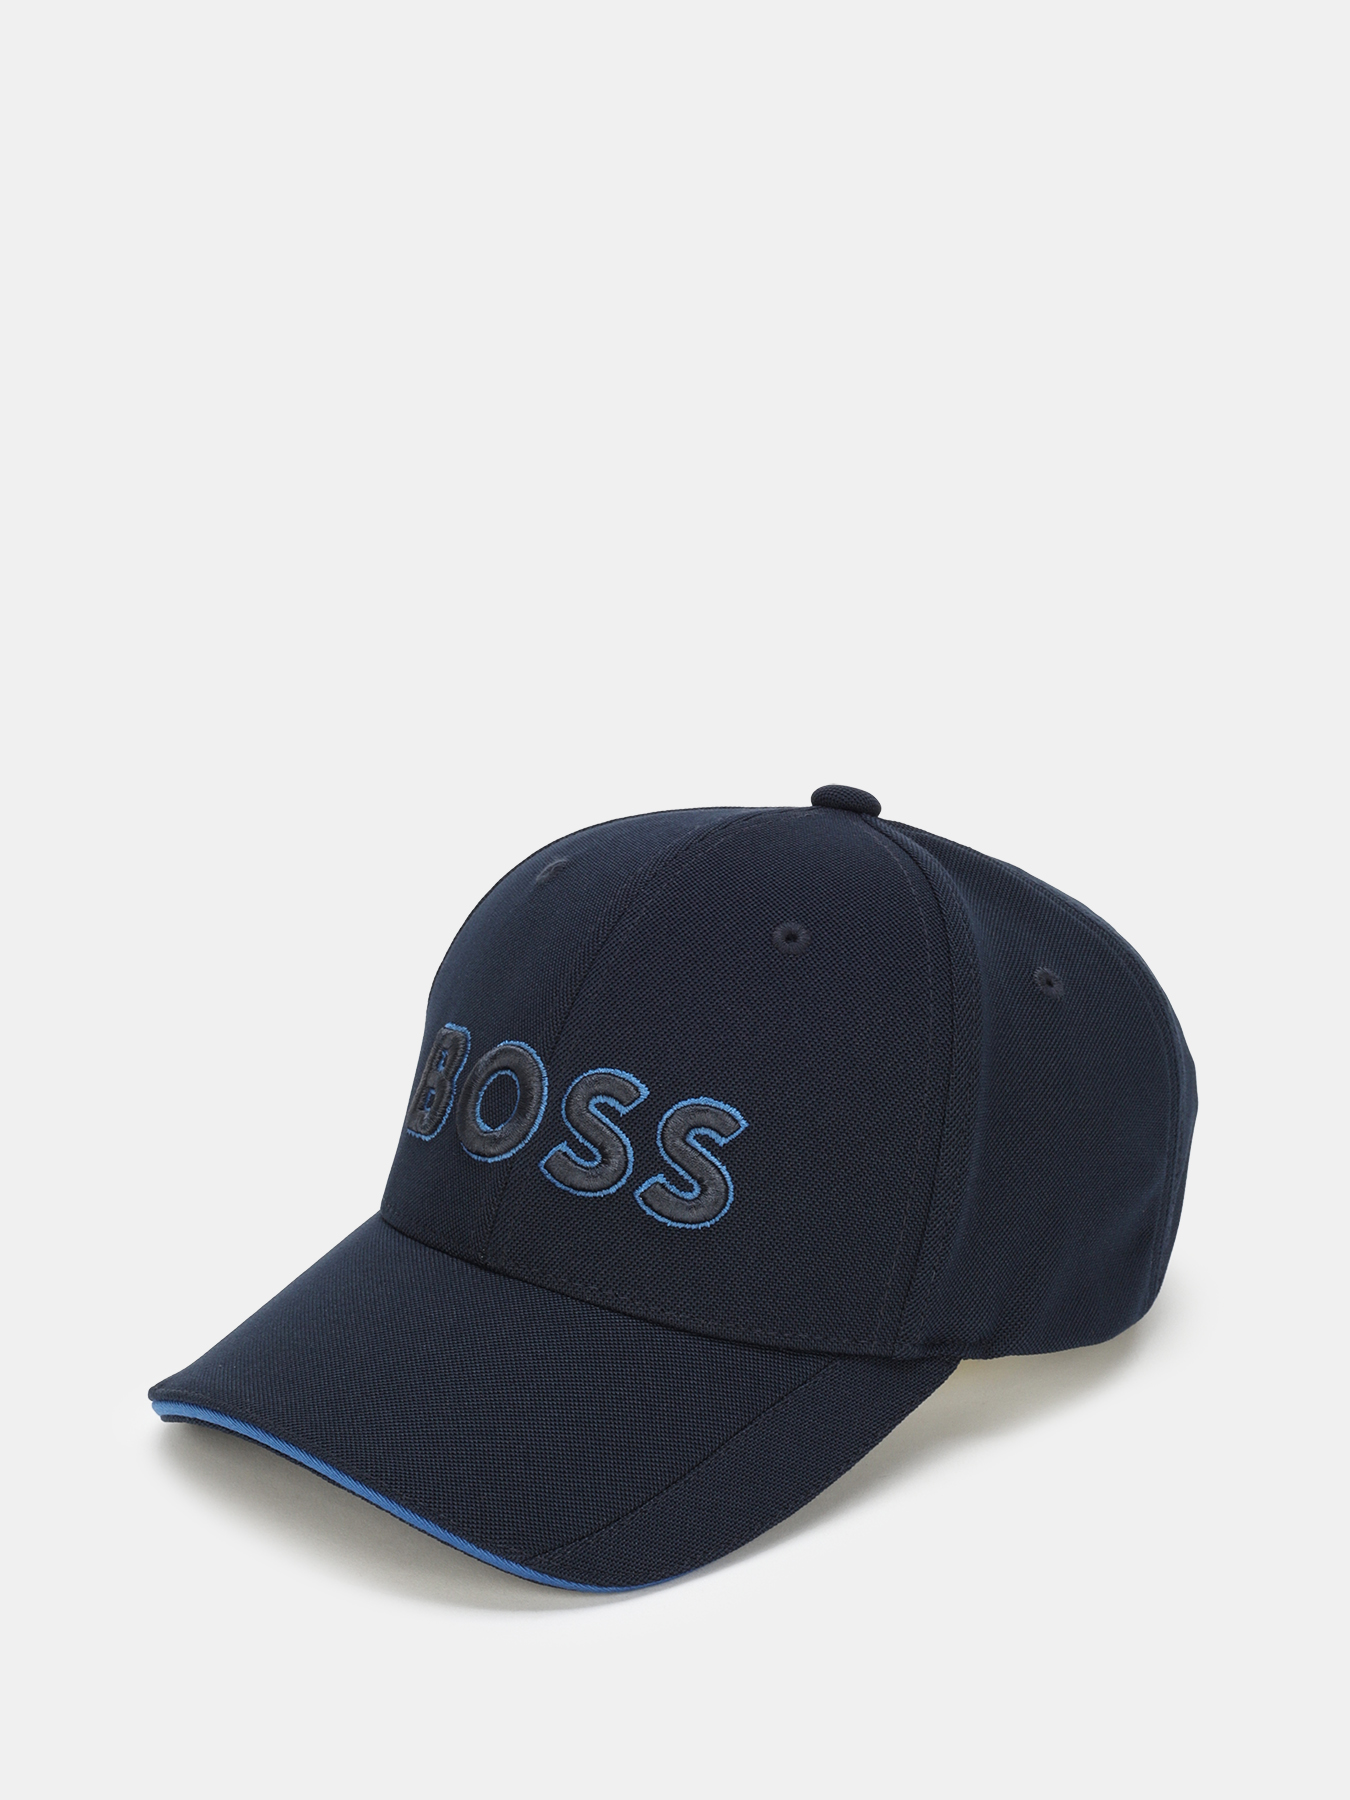 Бейсболка Cap US BOSS 437900-185, цвет темно-синий, размер Б/Р